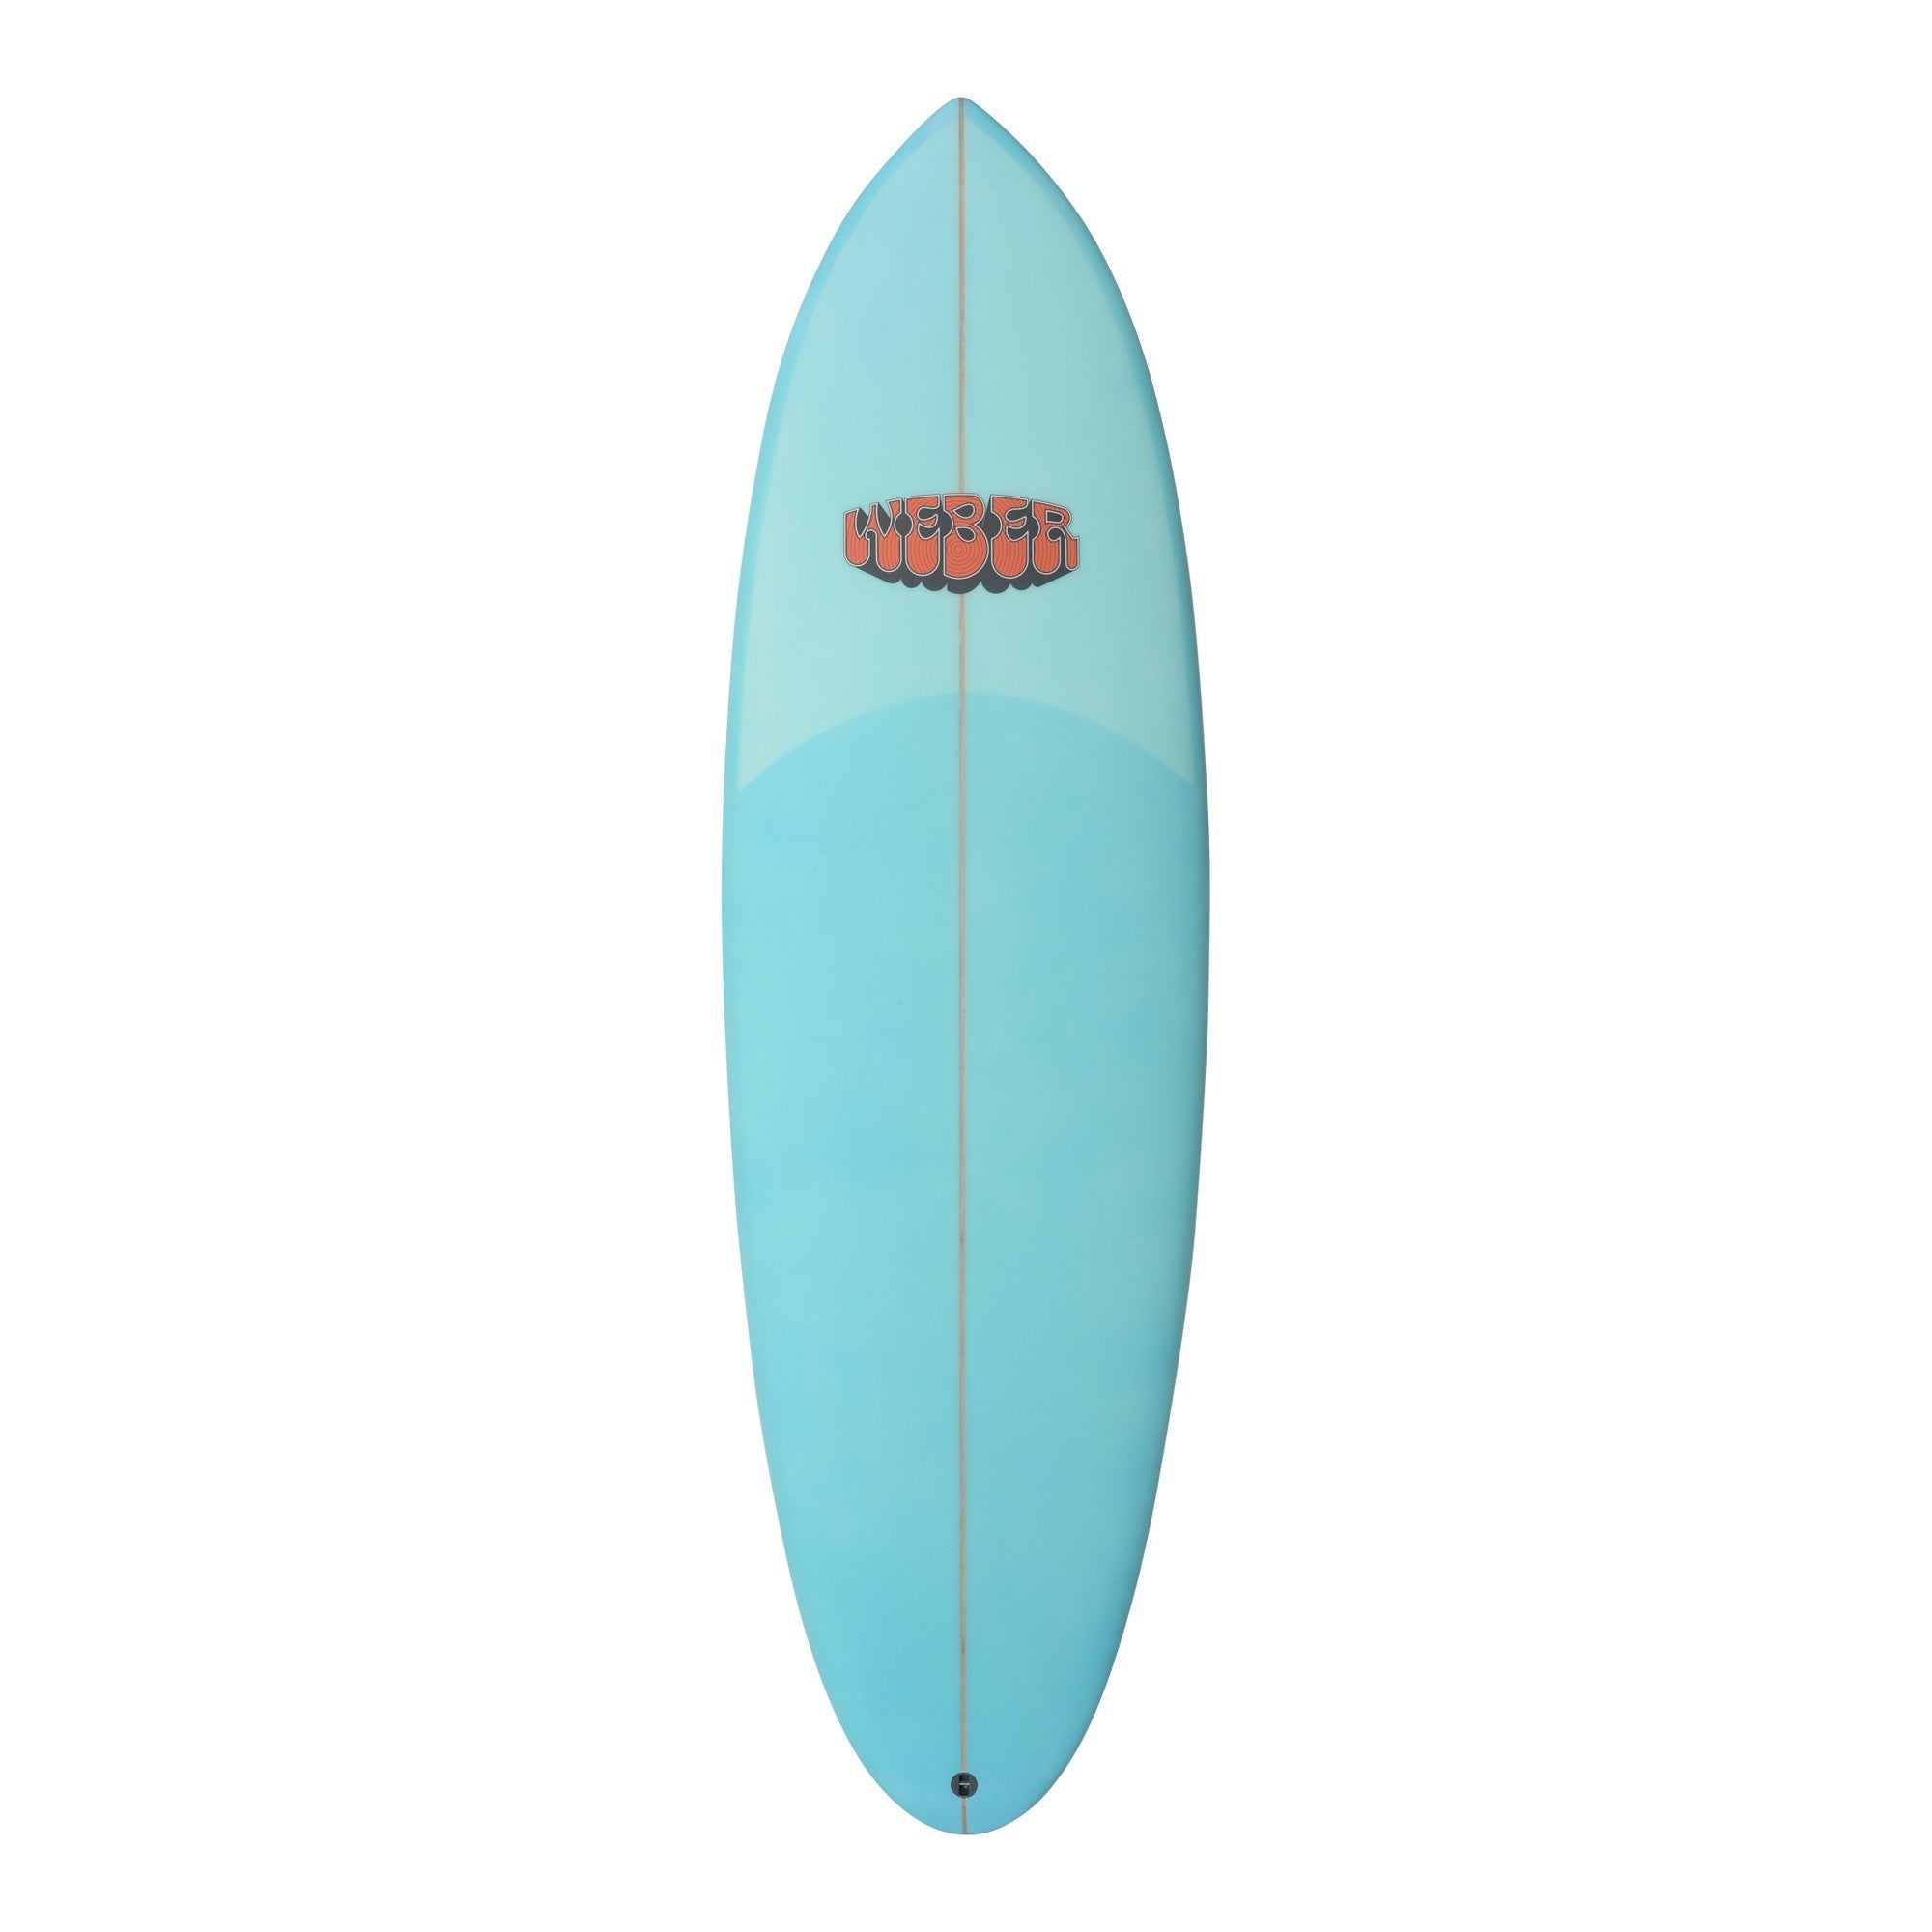 WEBER SURFBOARDS - Easy Rider 6'3 - Blue